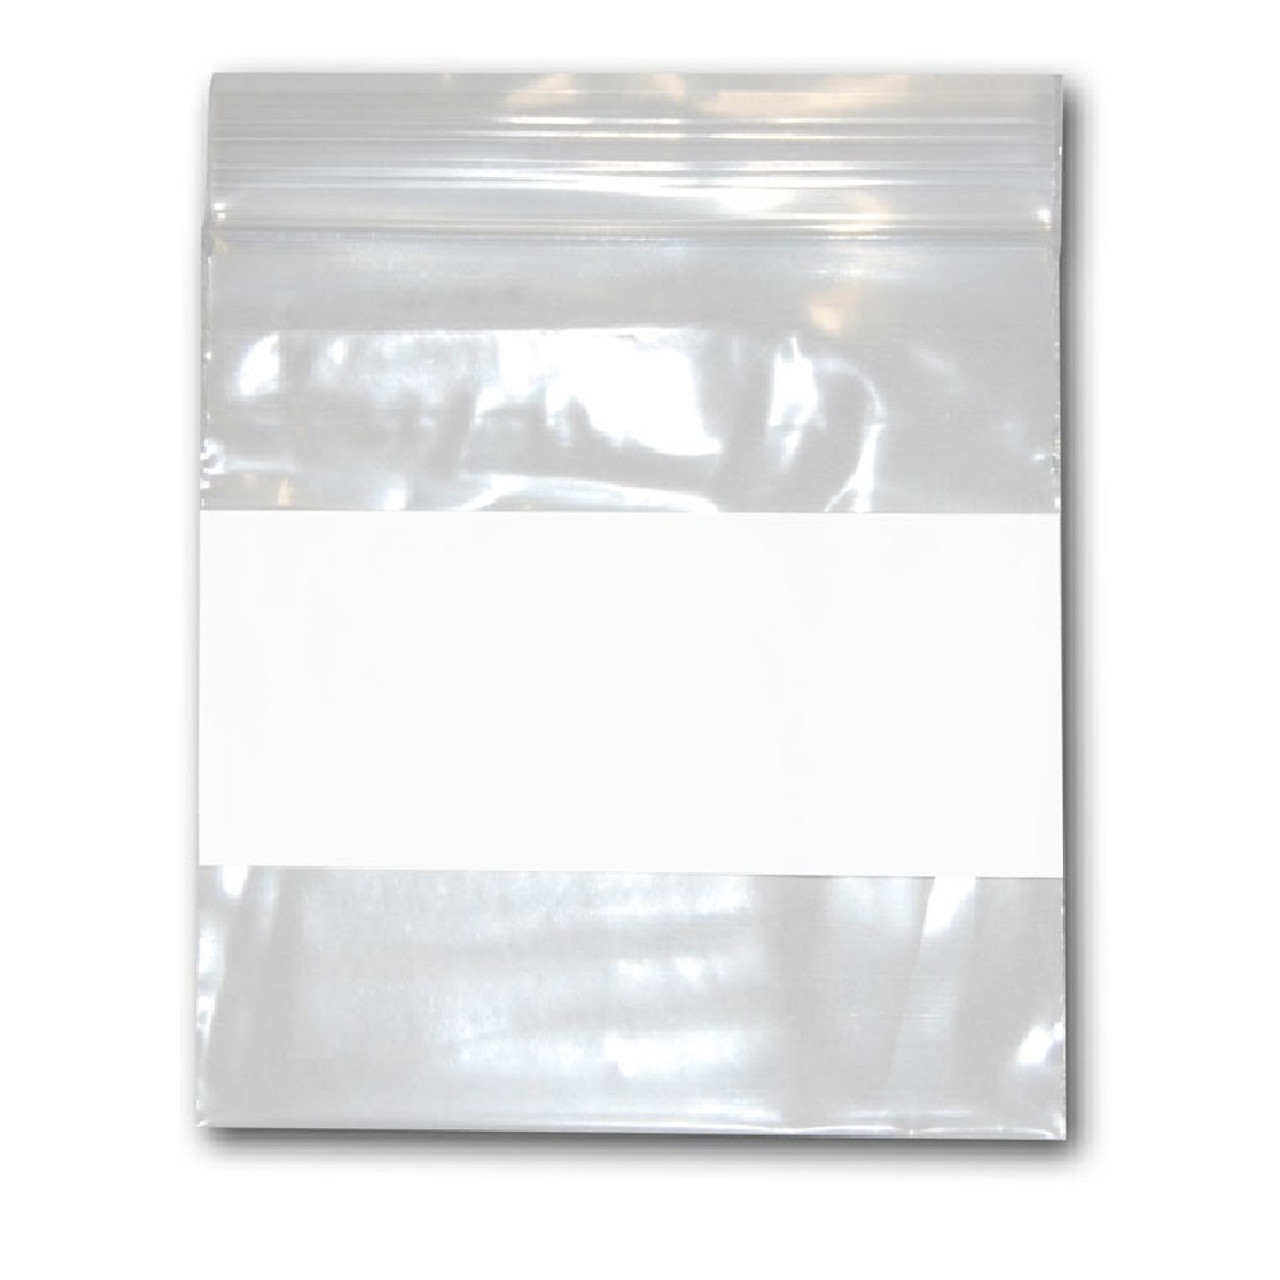 Reclosable Plastic Zipper Bags 2 mil, White Block Center. (100 Bags)